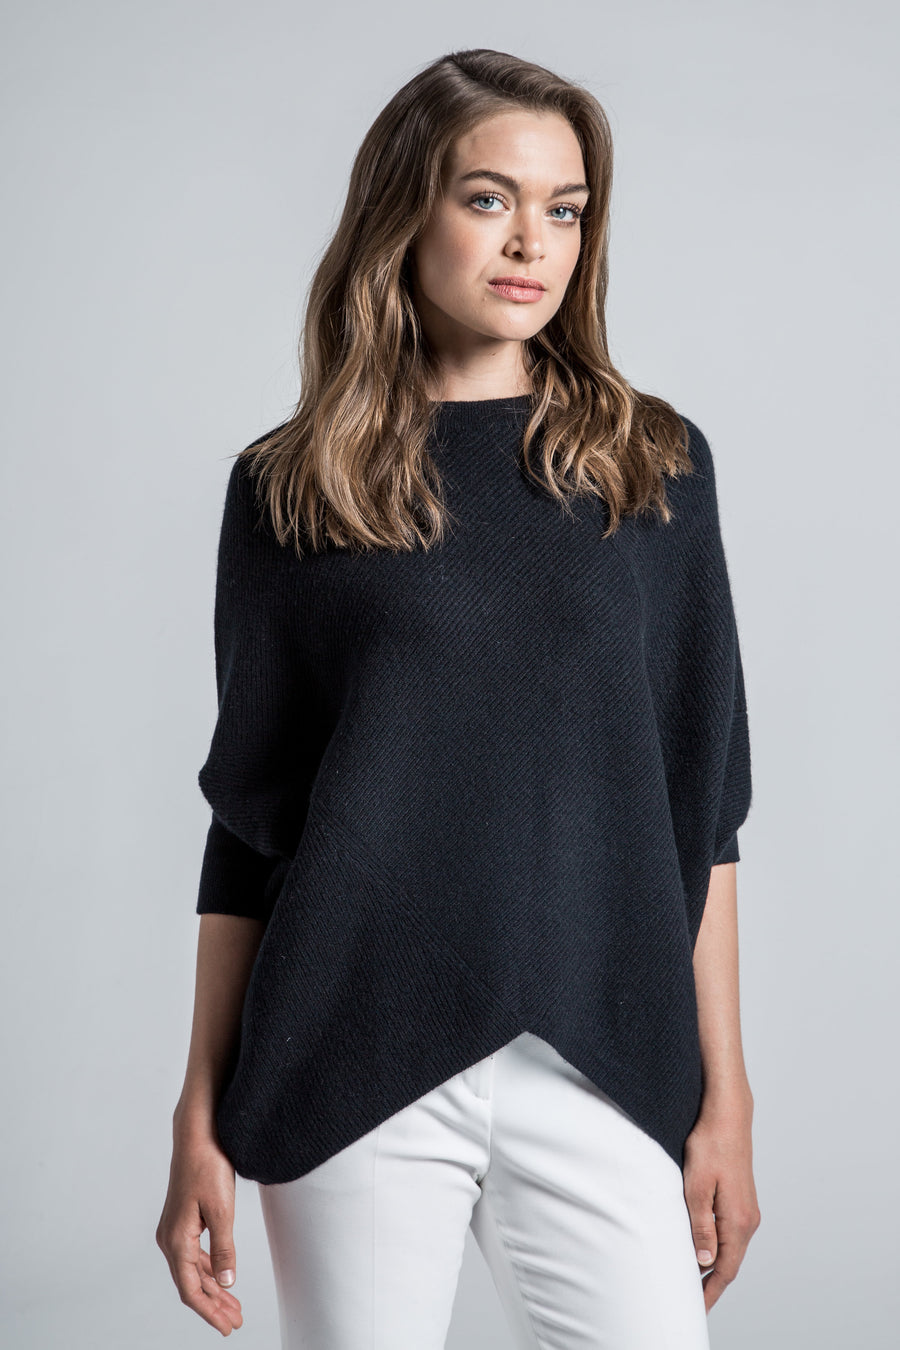 pine cashmere womens cara crewneck 100% pure cashmere poncho sweater in black